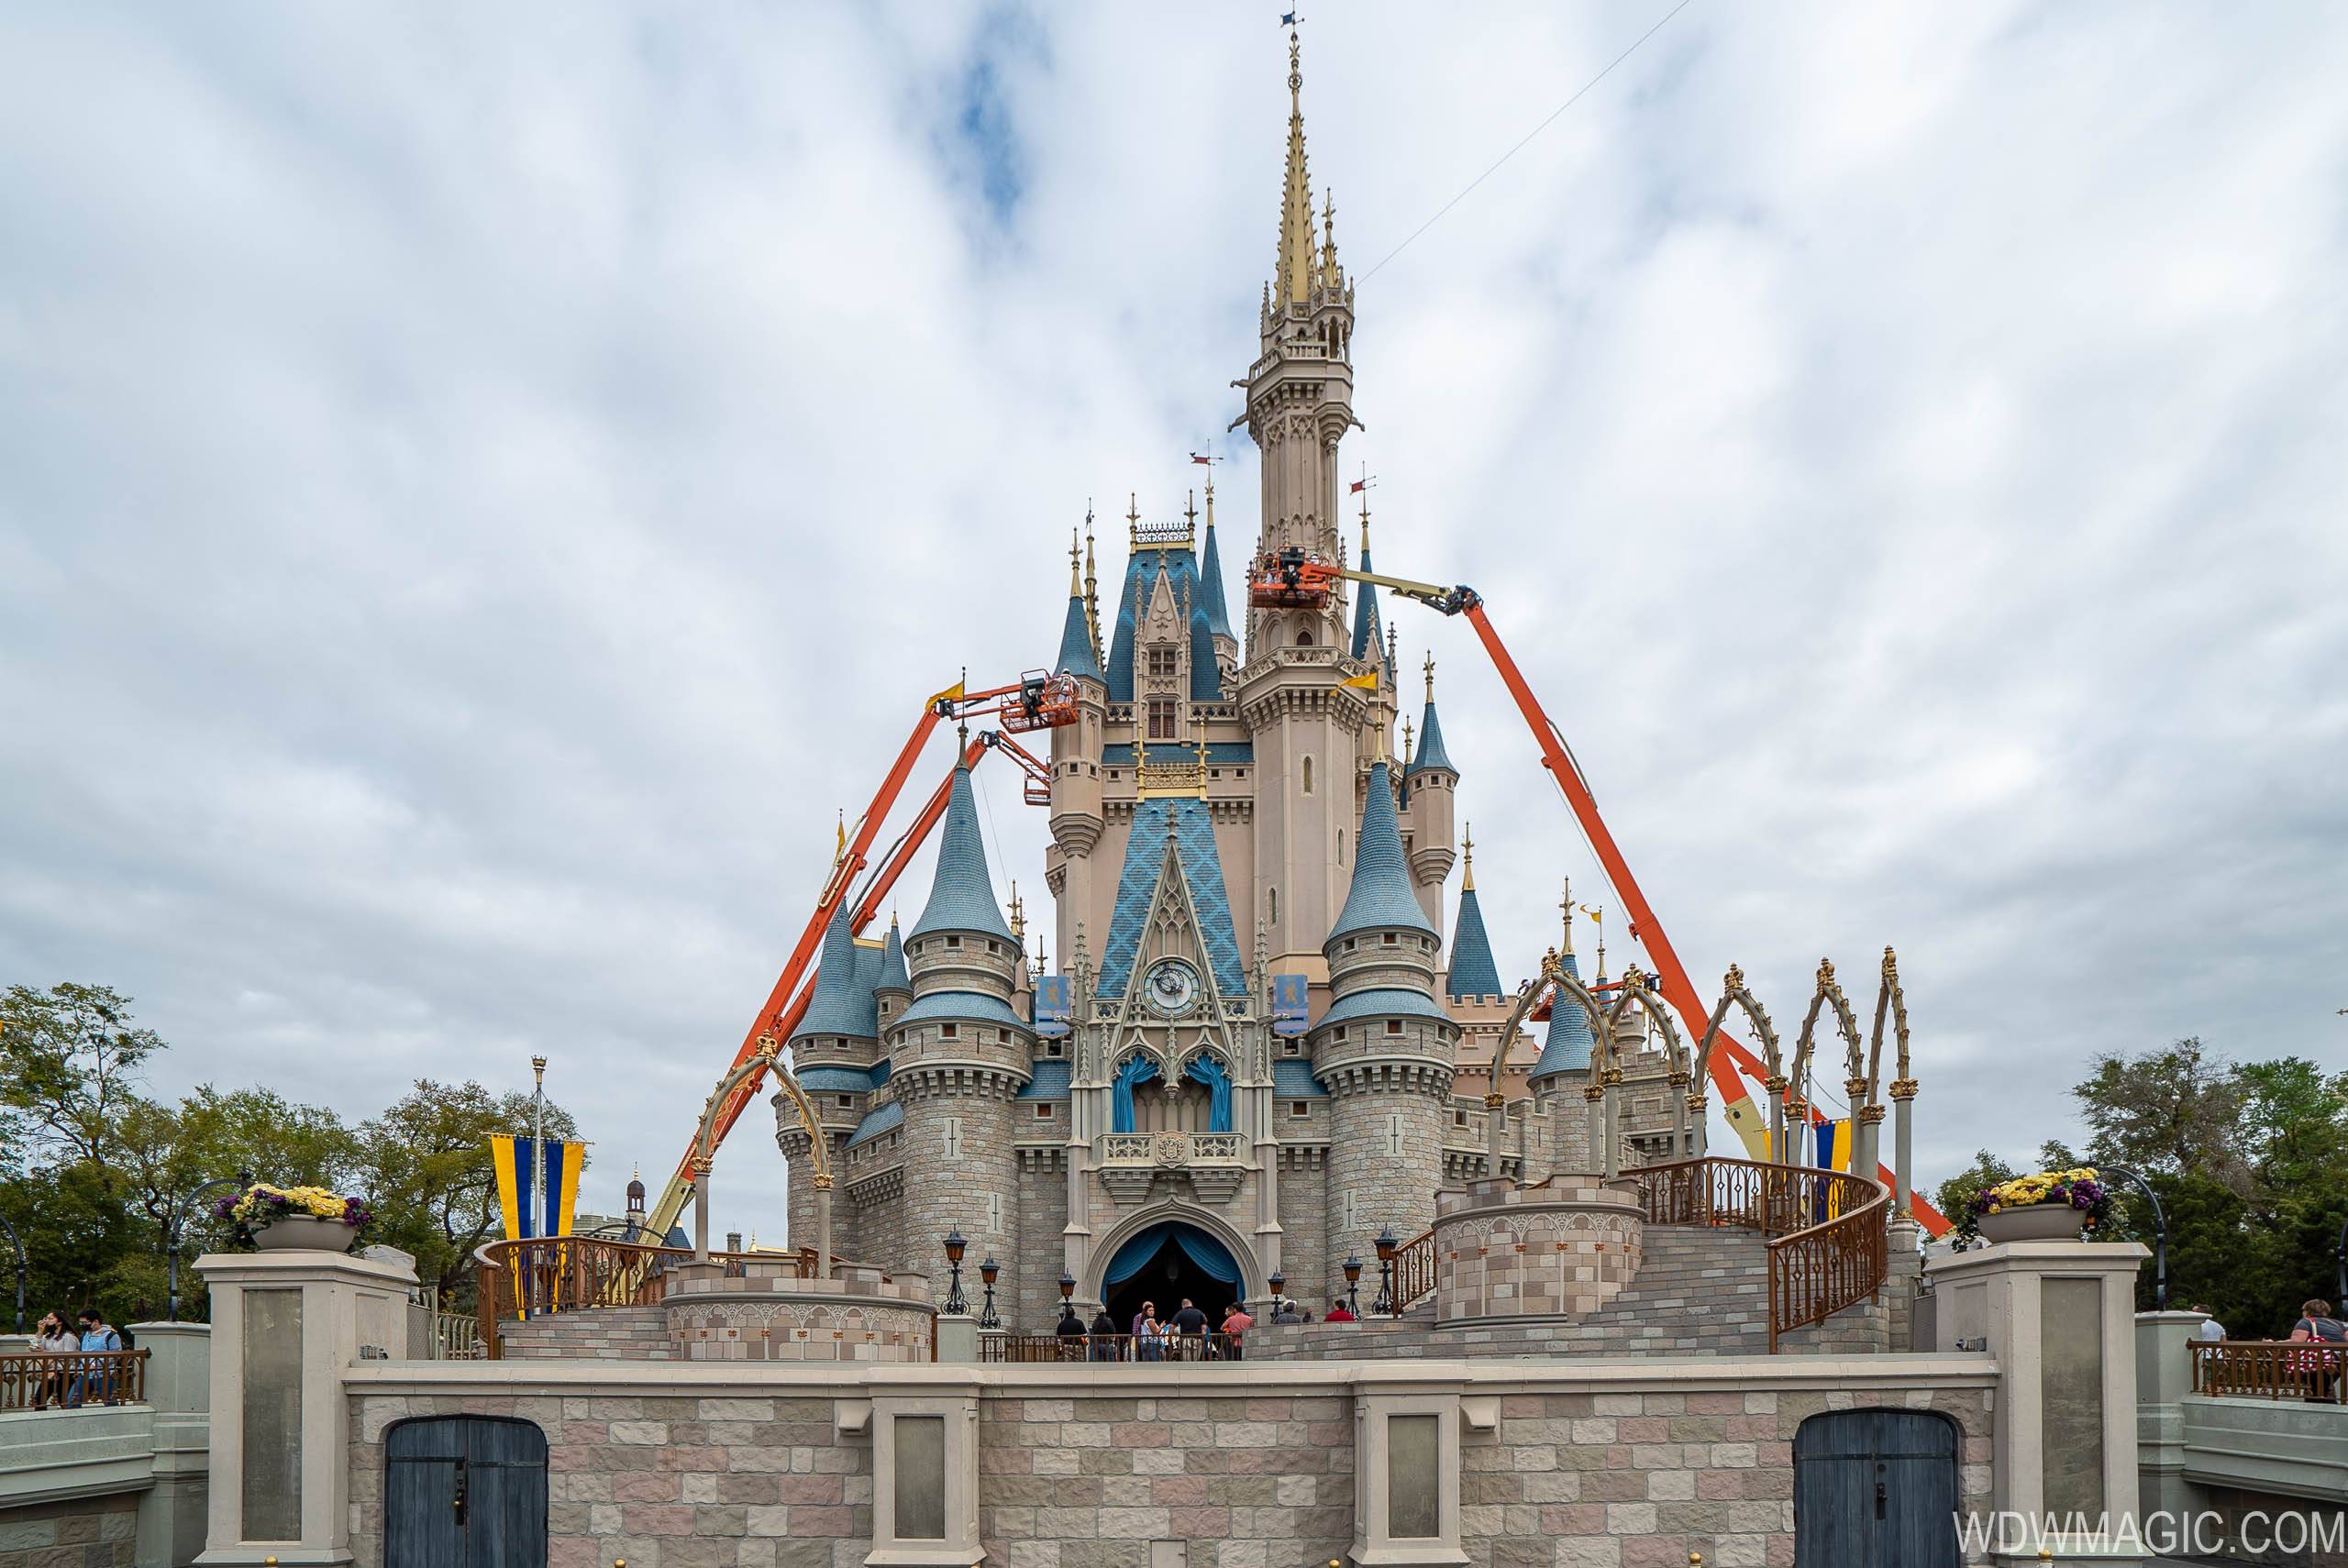 Cinderella Castle enhancements - March 9 2020